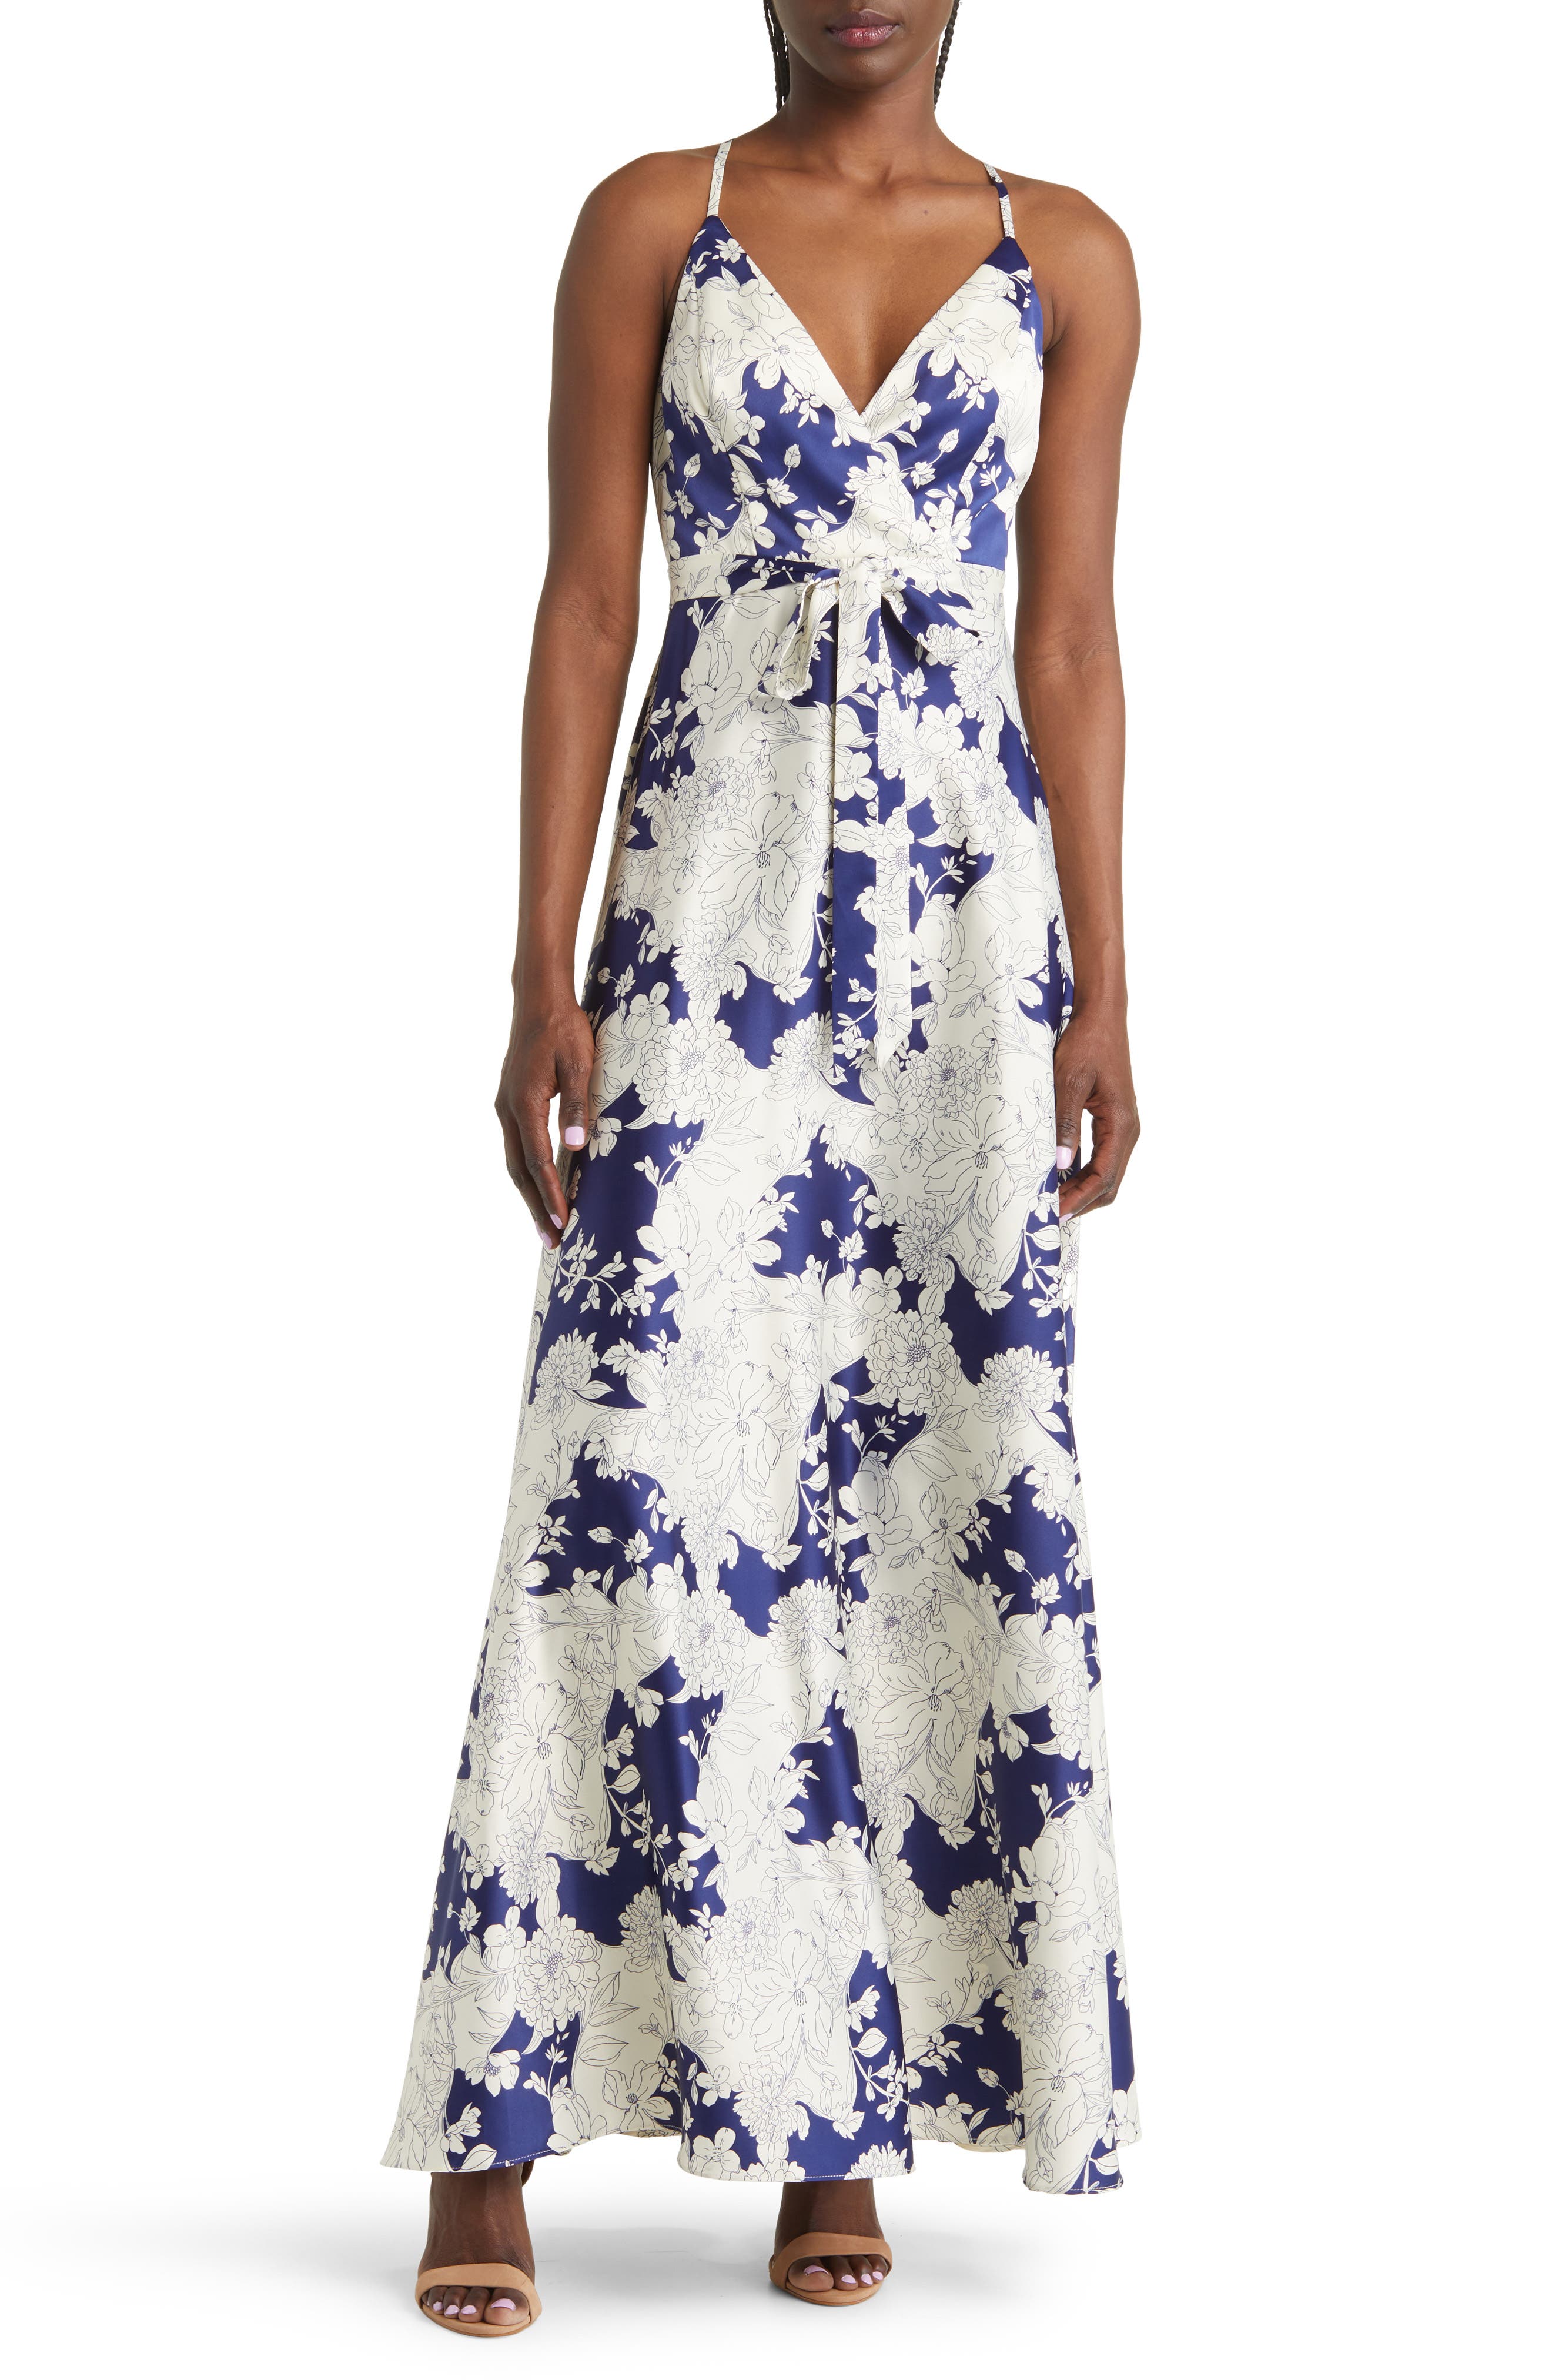 Blue and White Floral Dress - Skater Mini Dress - Faux Wrap Dress - Lulus